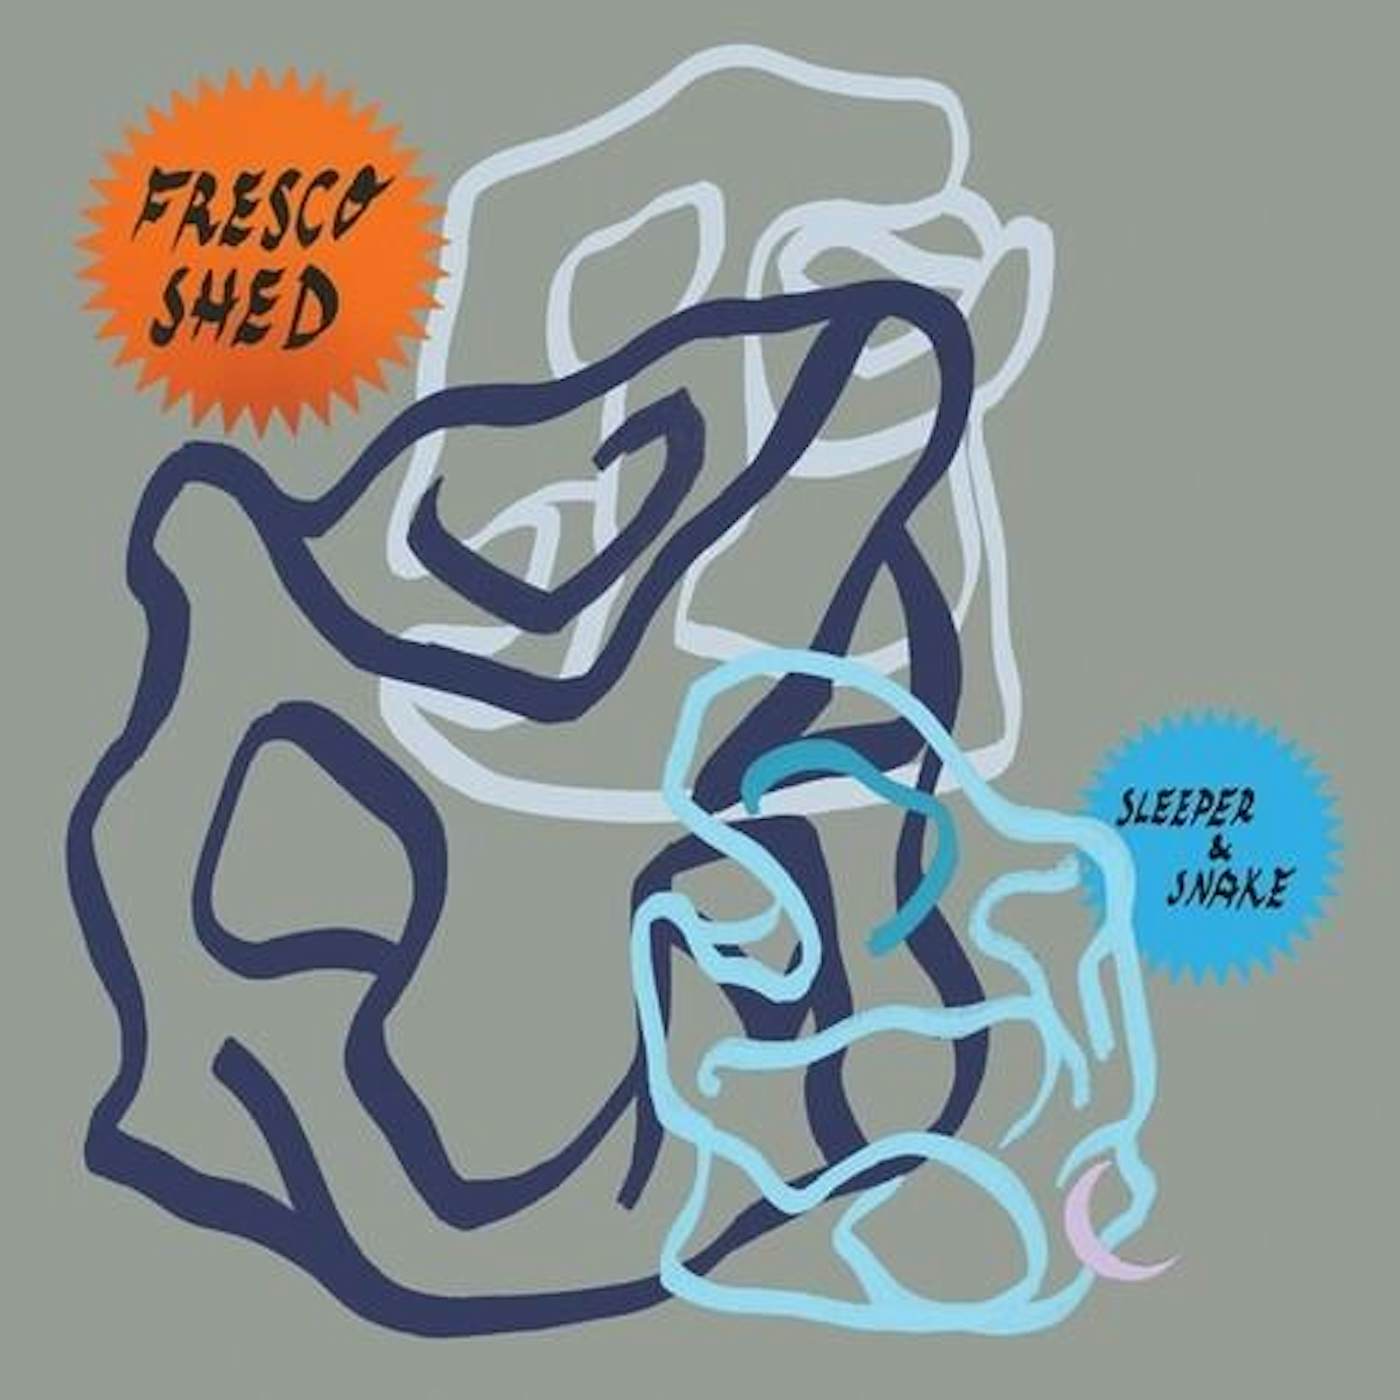 Sleeper And Snake Fresco Shed Vinyl Record